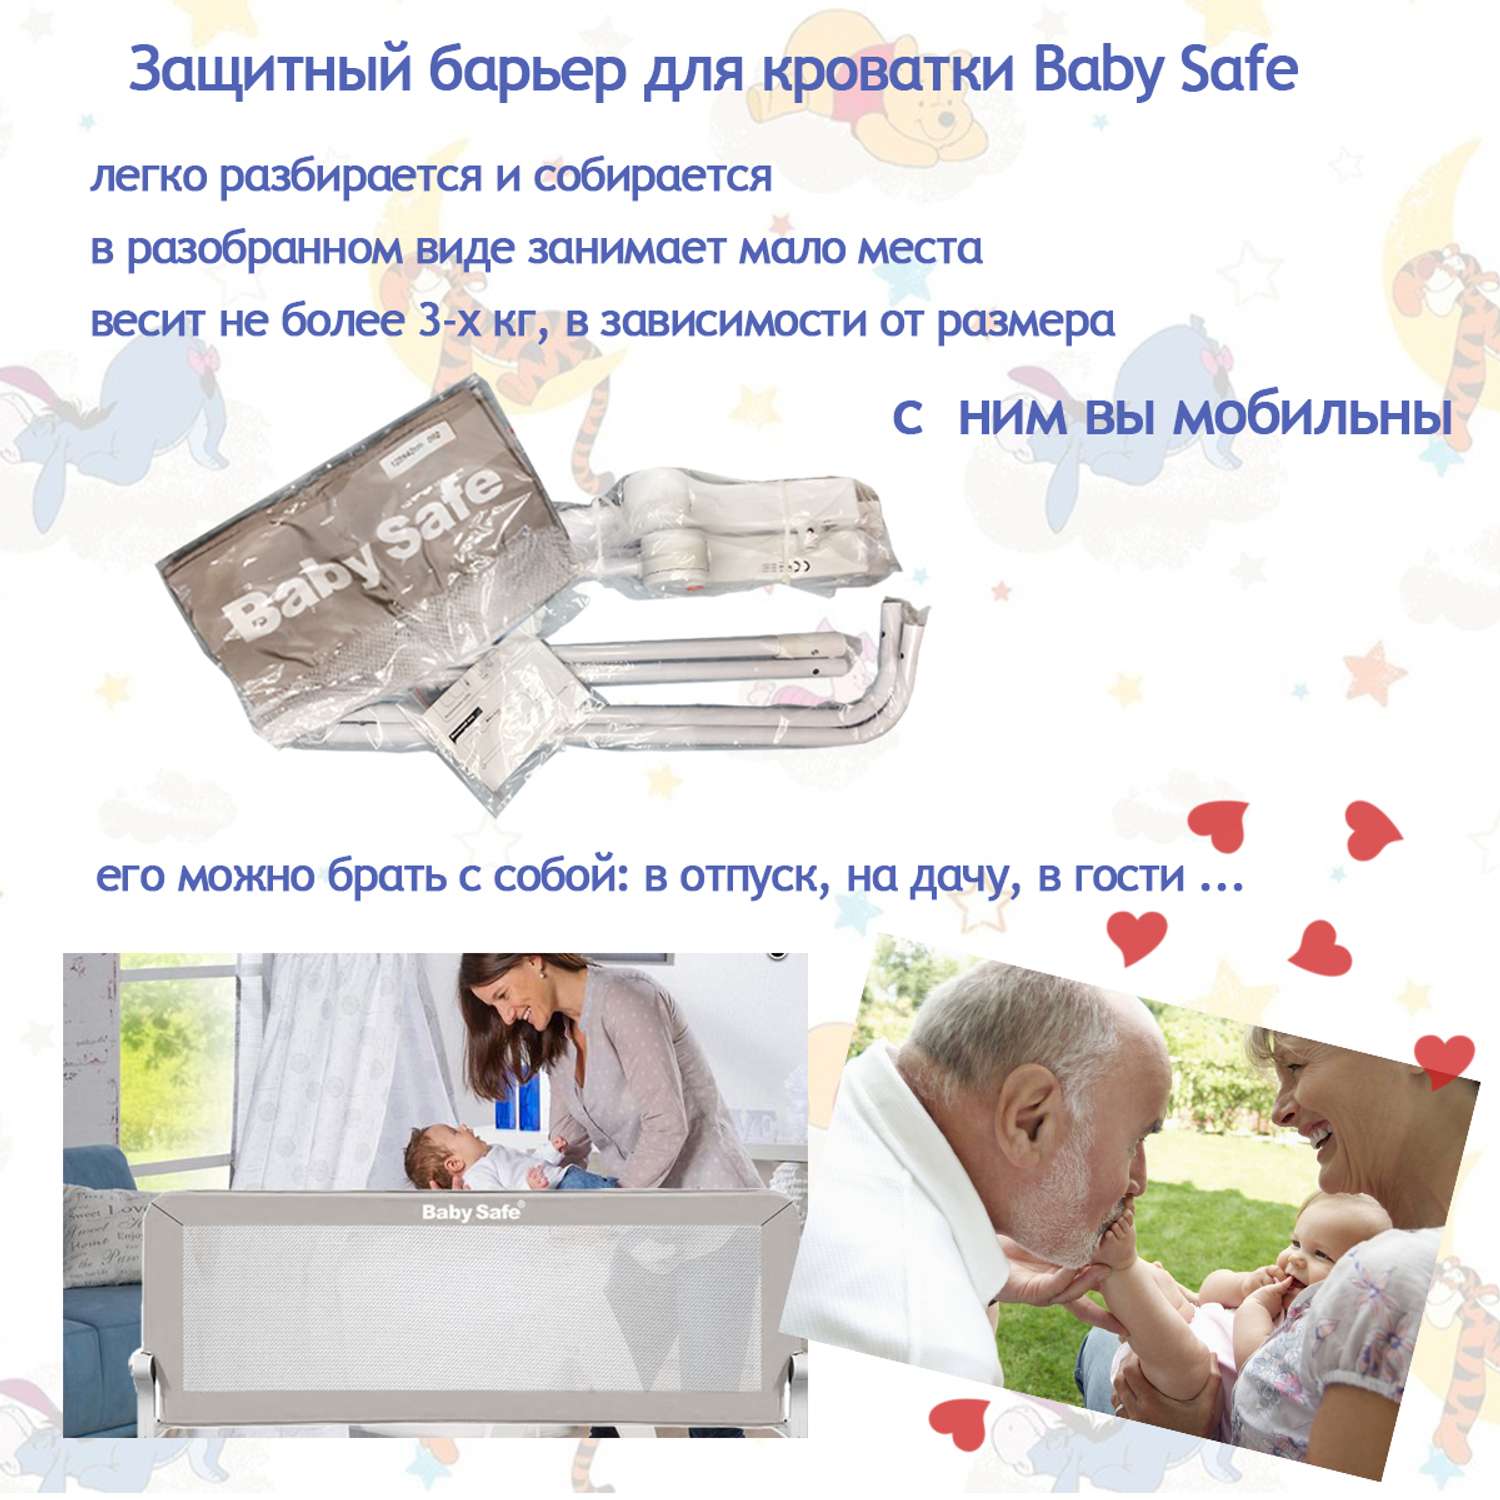 Барьер защитный для кровати Baby Safe защитный для кровати Ушки 180х66 серый - фото 6